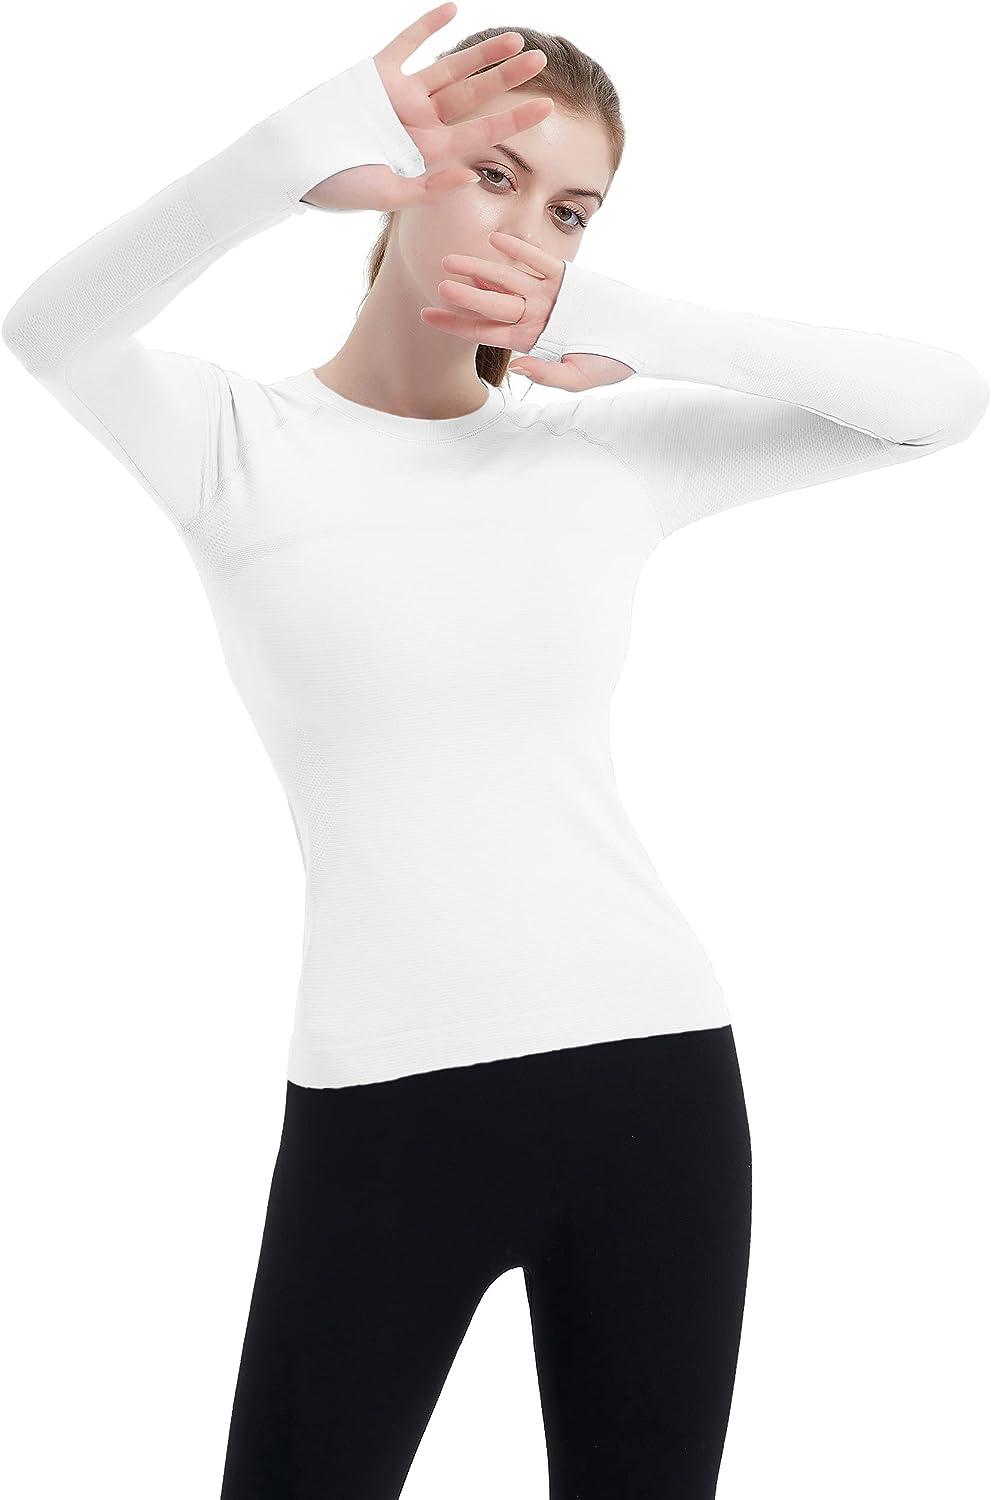 MathCat Workout Shirts for Women,Long Sleeve Athletic Shirt Women